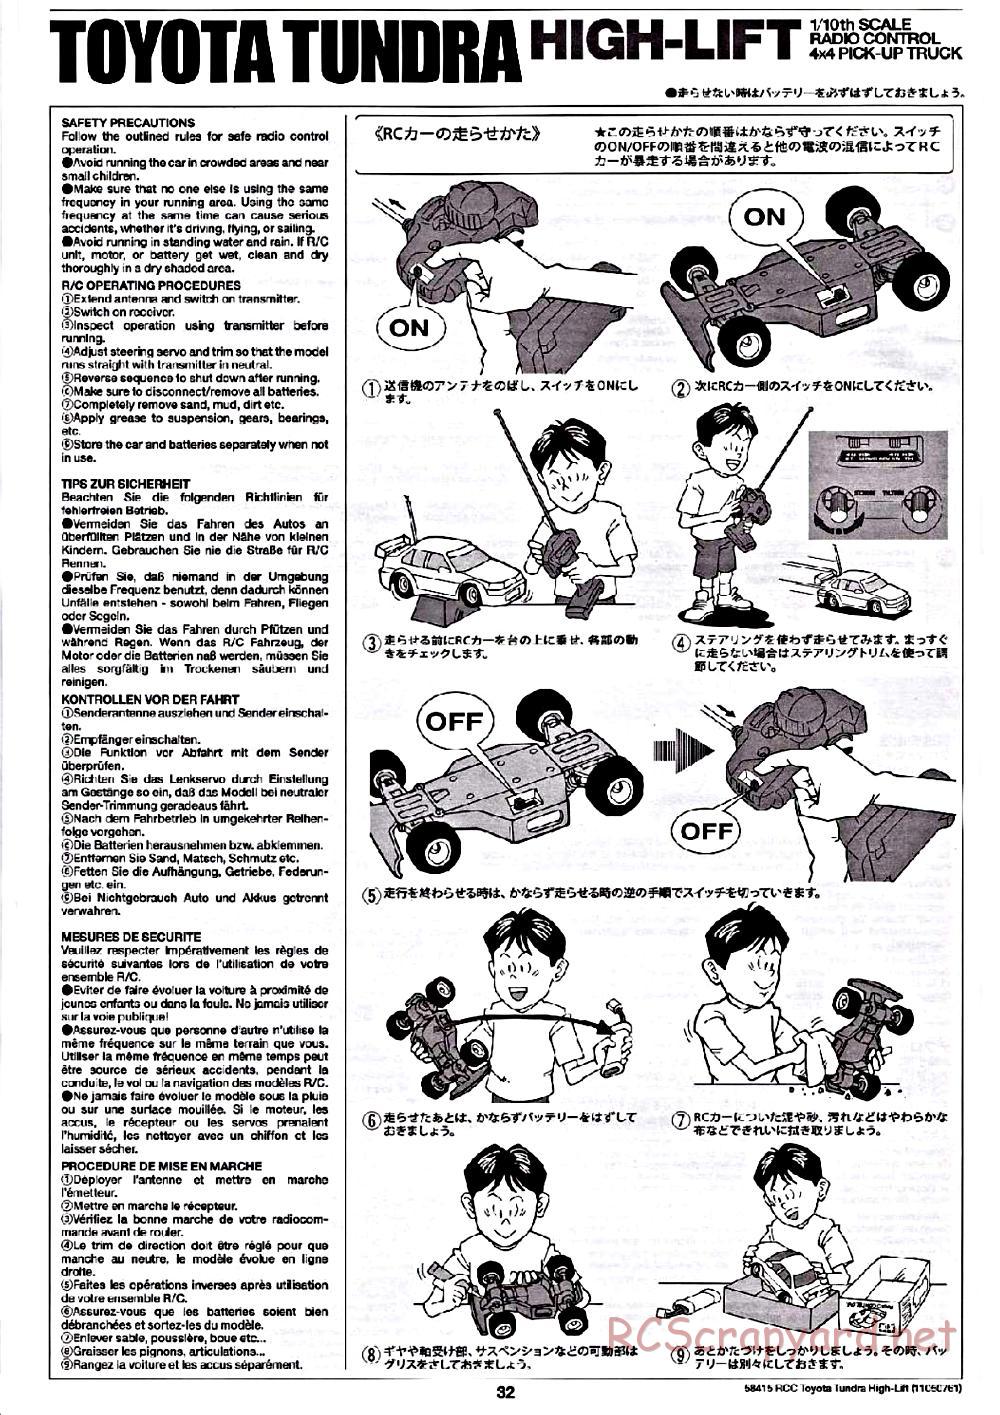 Tamiya - Toyota Tundra High-Lift Chassis - Manual - Page 32